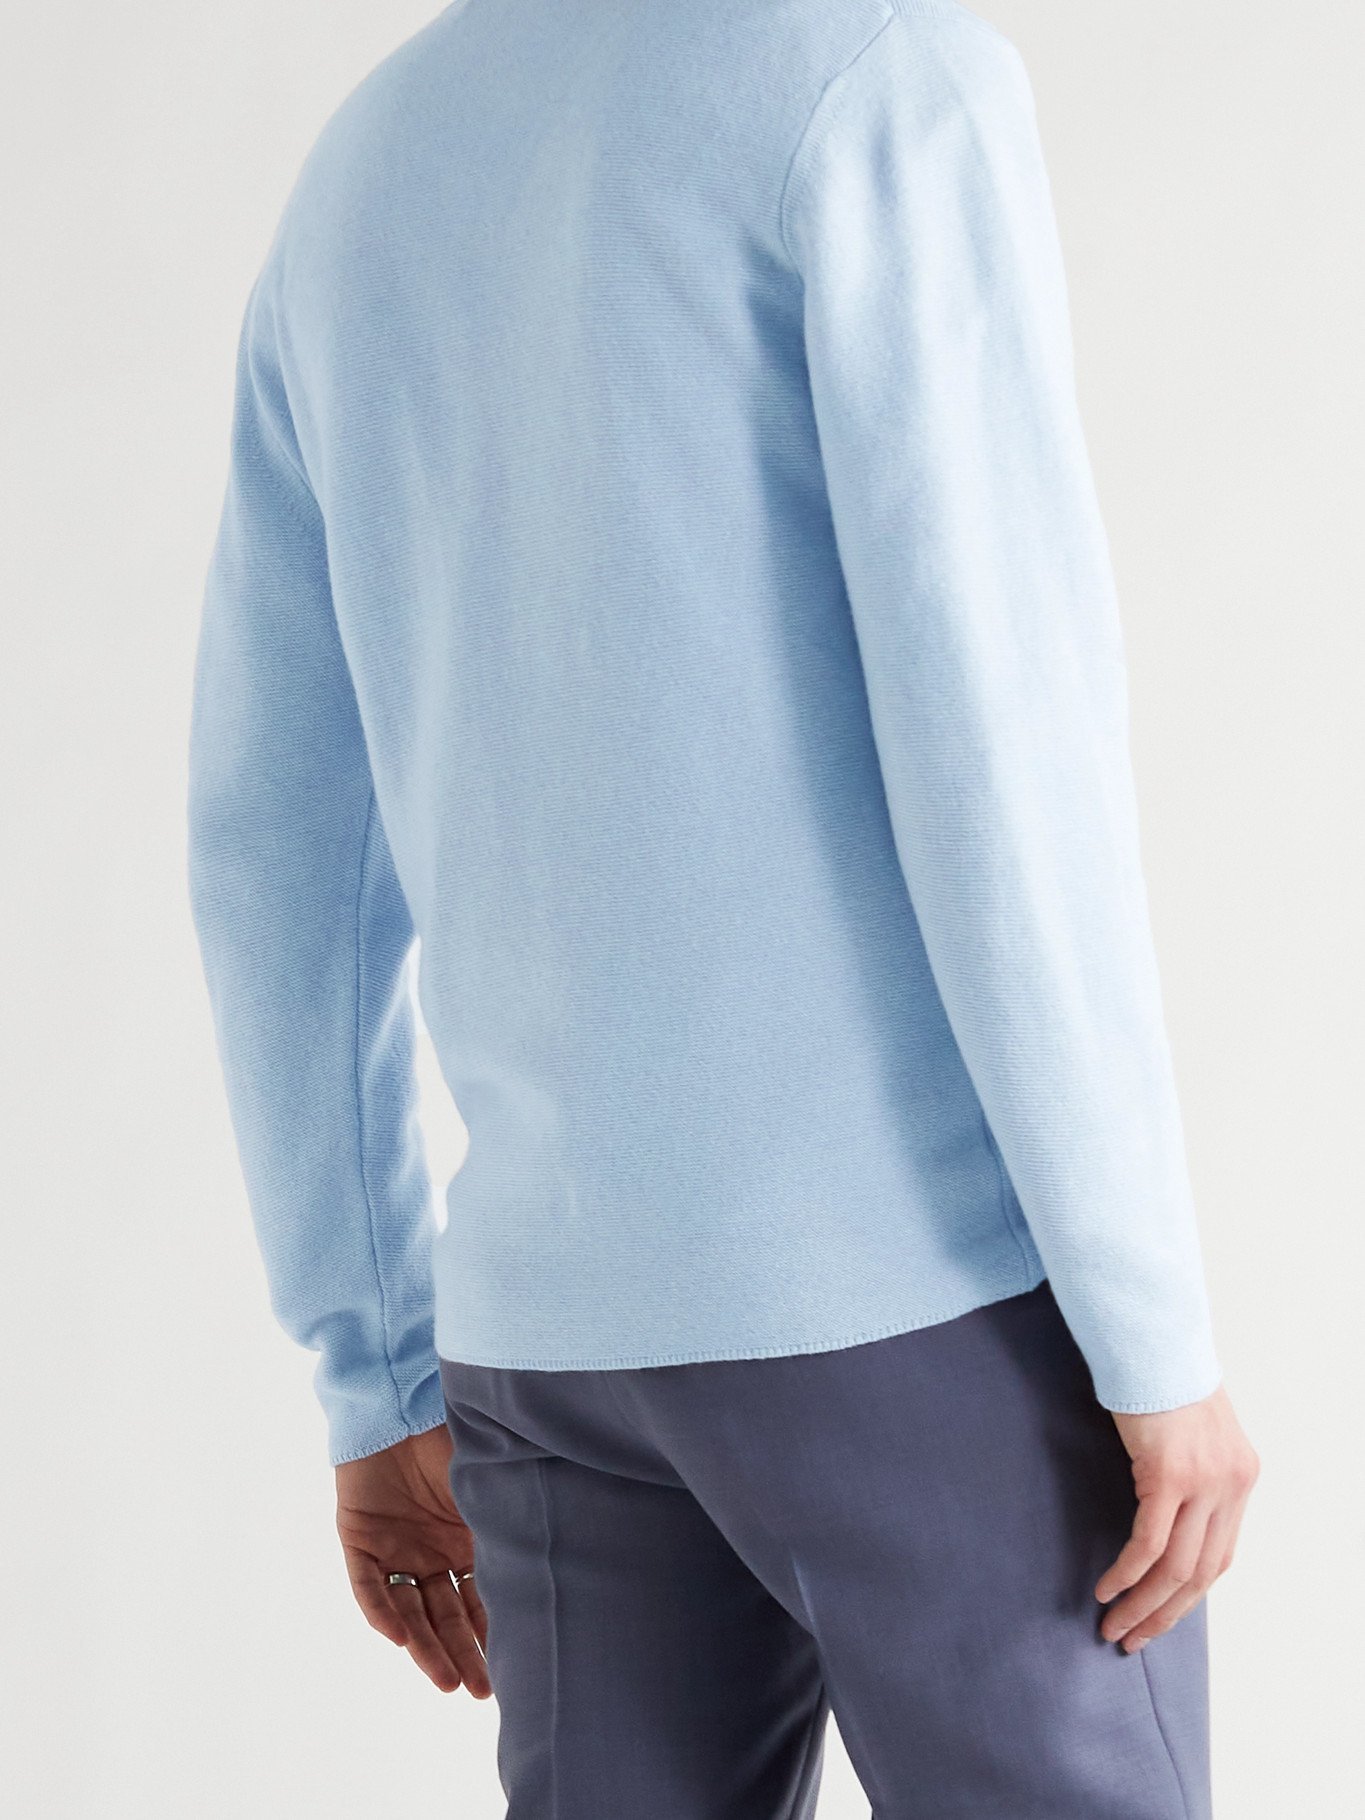 SÉFR - Linus Knitted Sweater - Blue - S Séfr